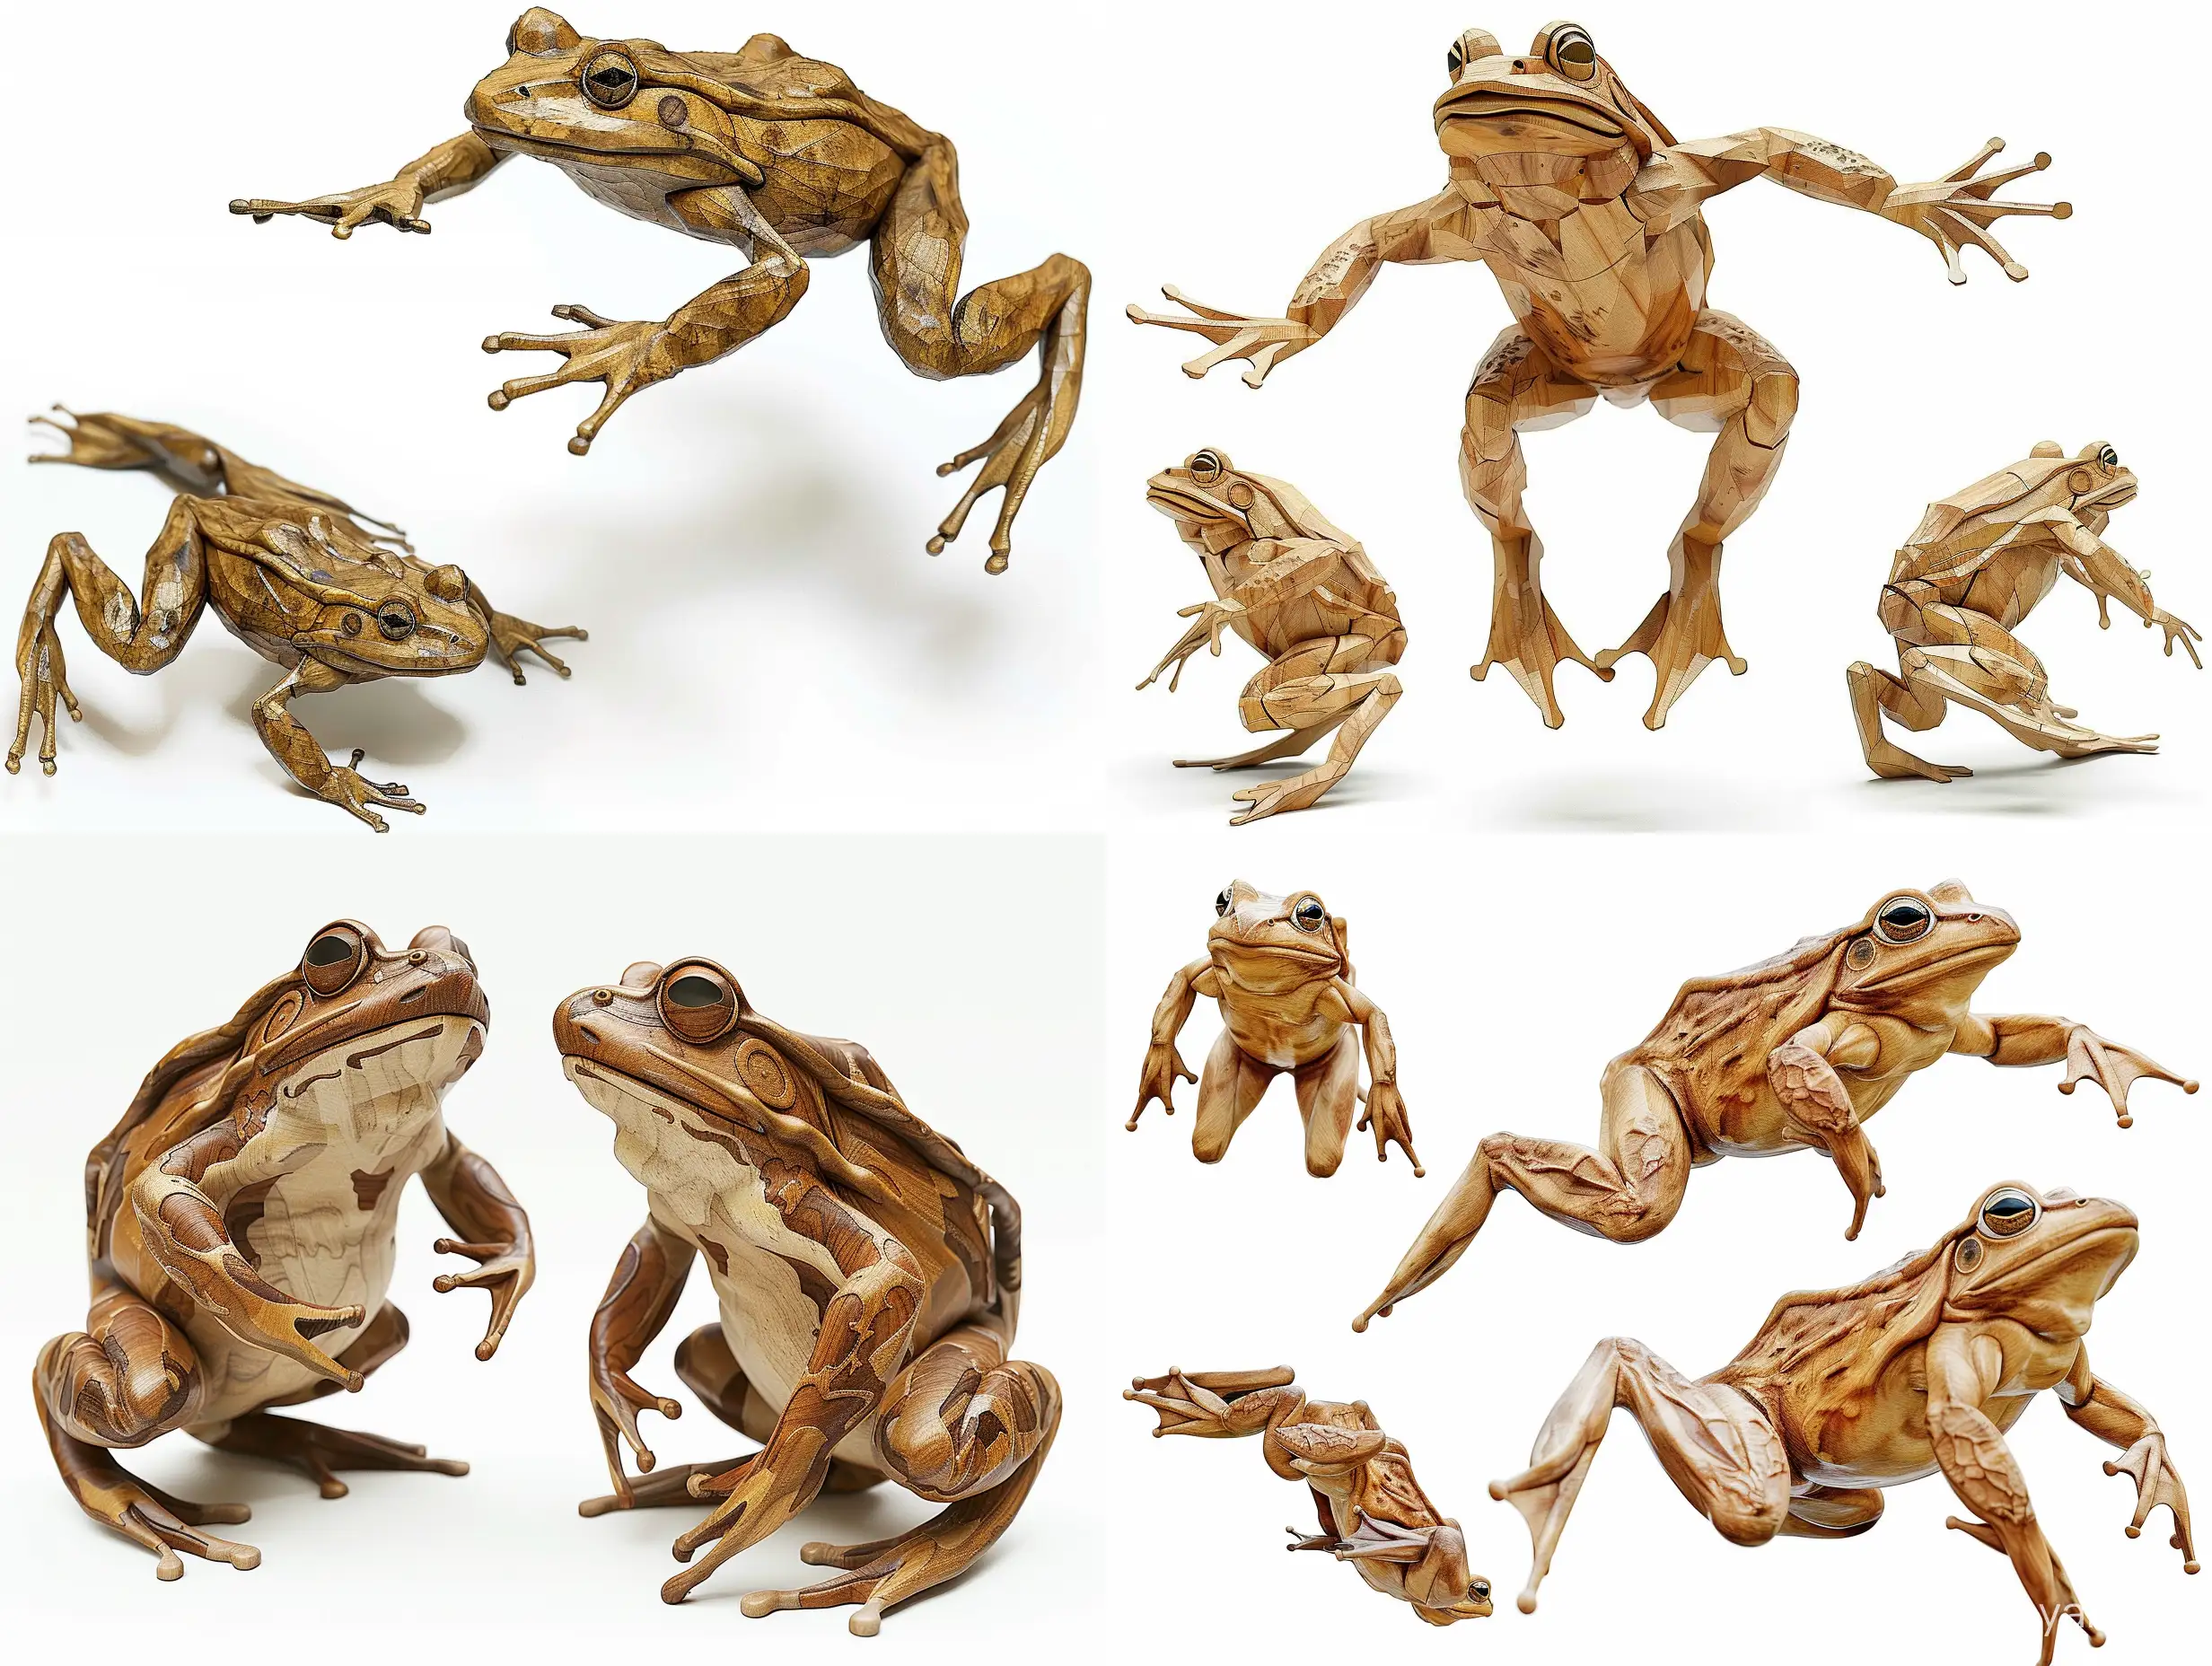 Dynamic-Wooden-Frog-Sculpture-Realistic-8k-Render-in-Multiple-Views